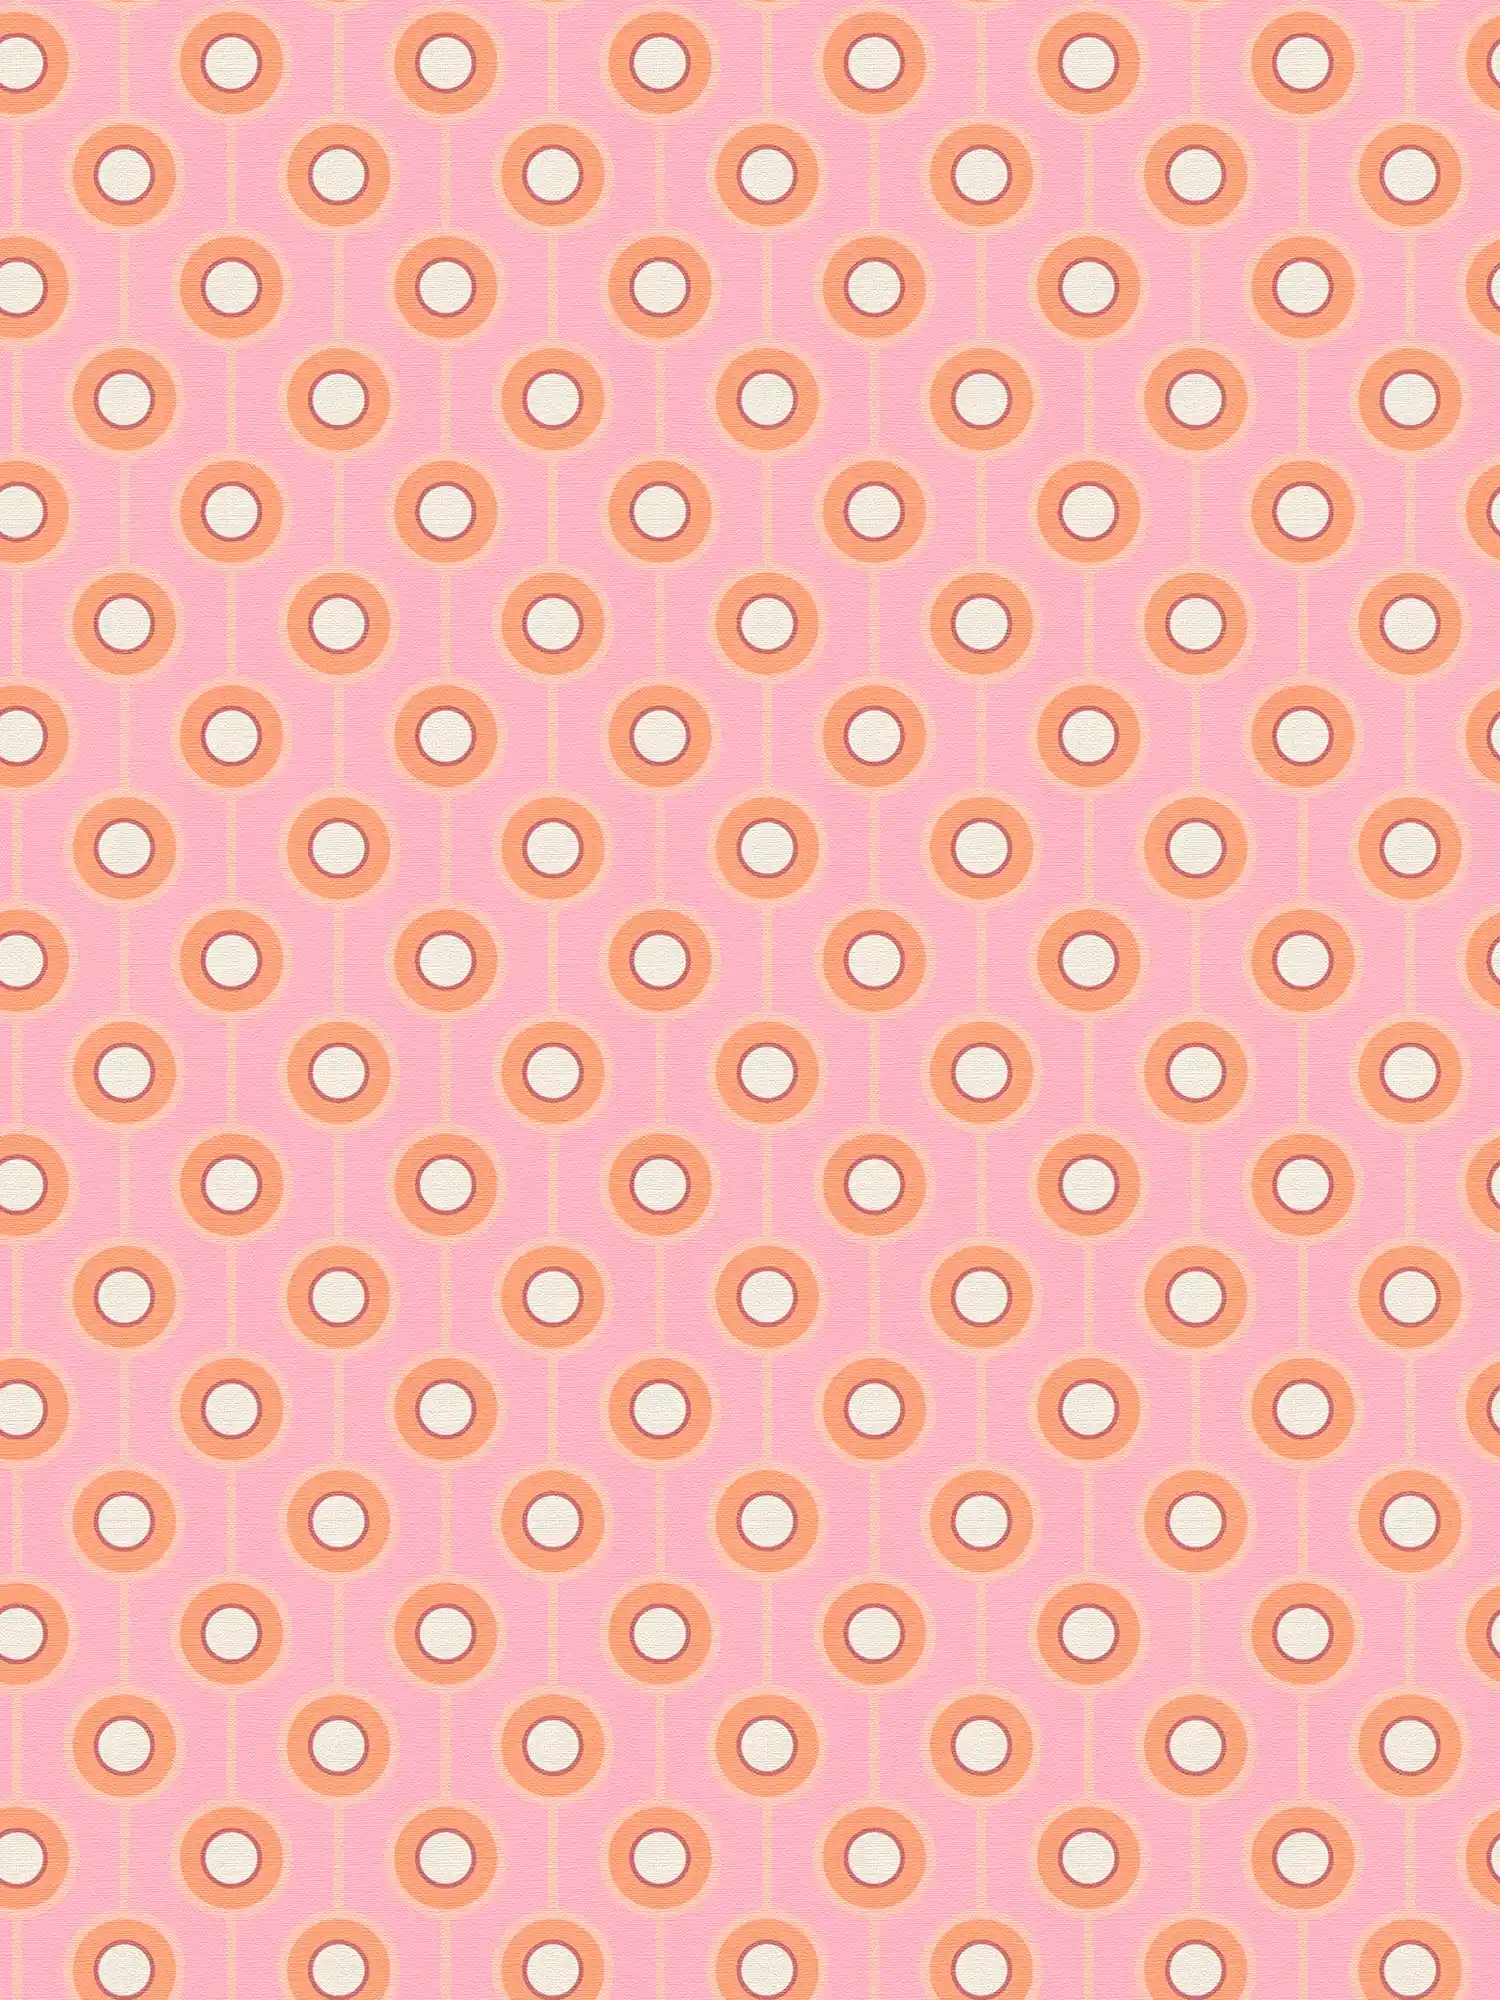 Papel pintado ligeramente texturizado con motivos circulares - rosa, naranja, beige
